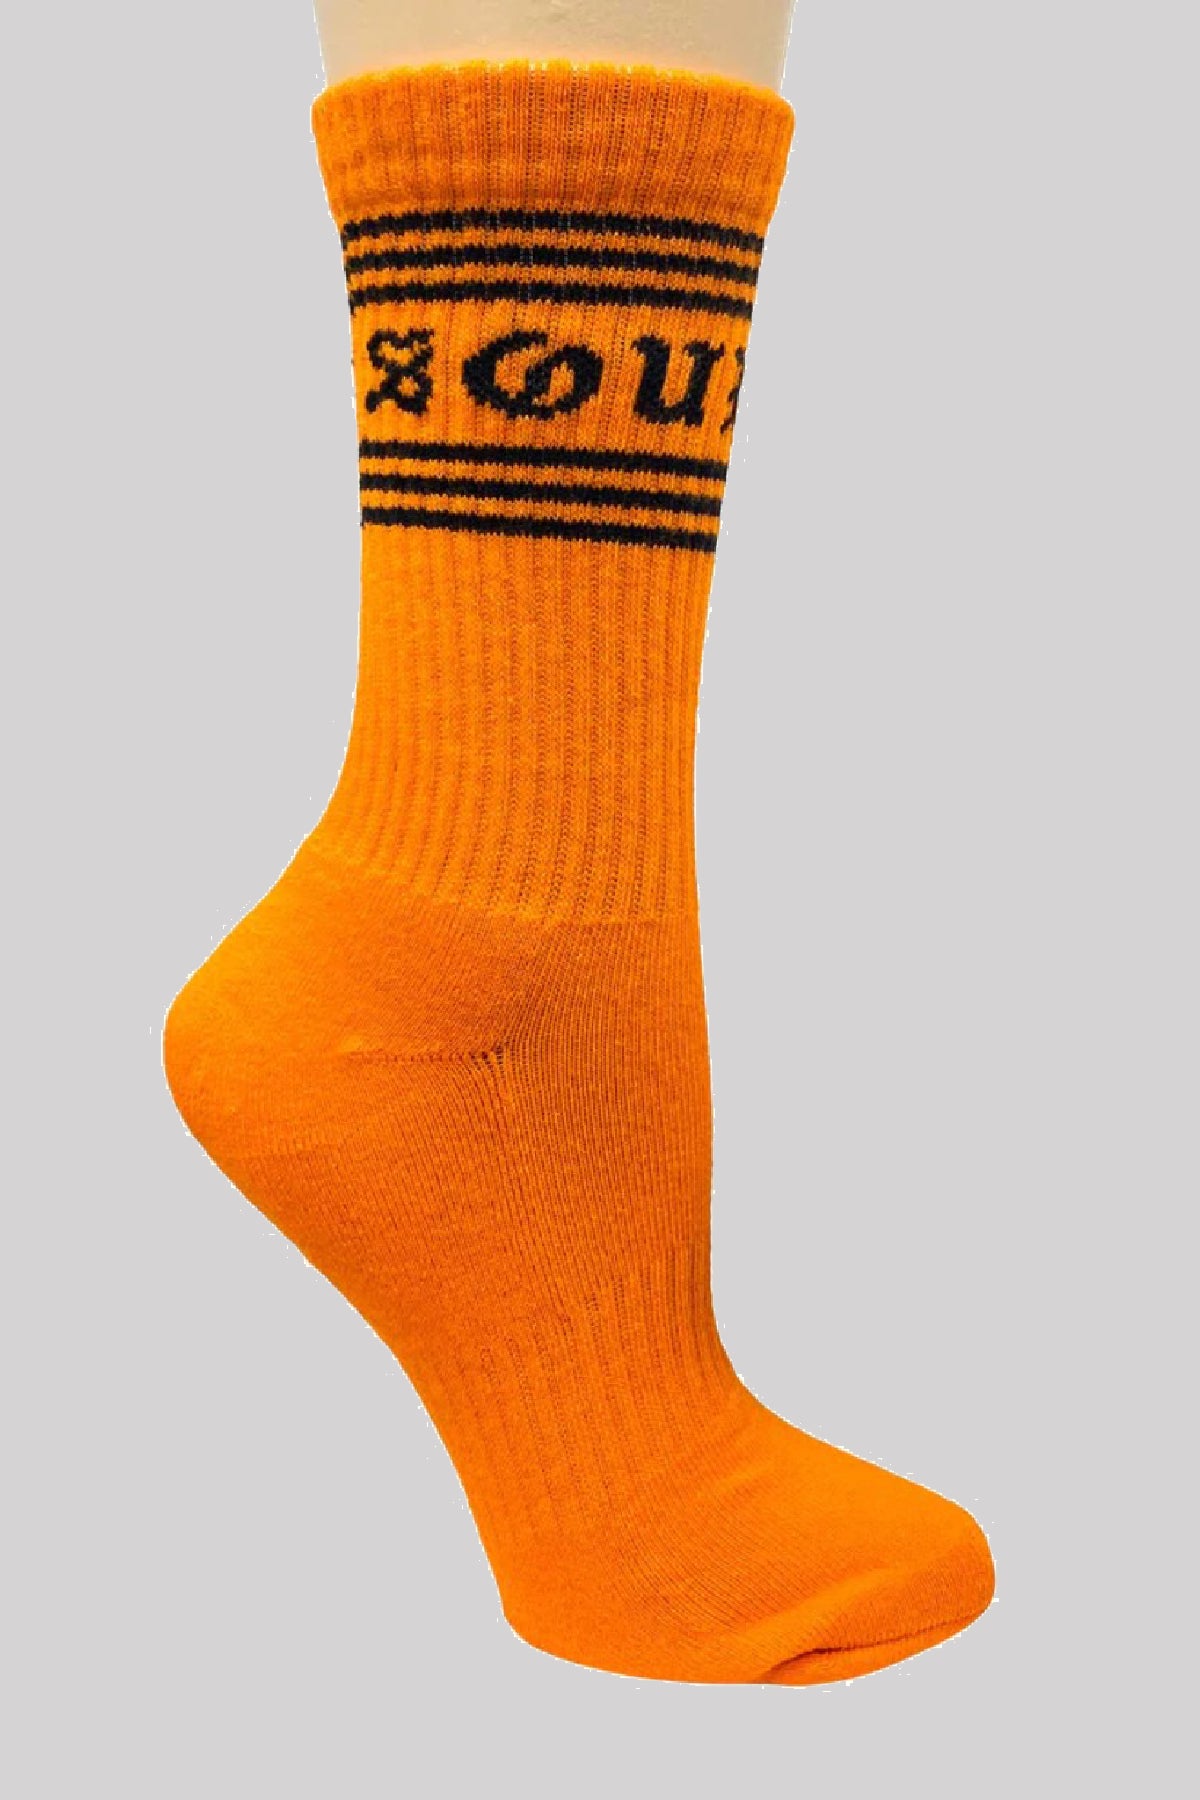 Sourpuss Orange High Visibility Crew Varsity Socks